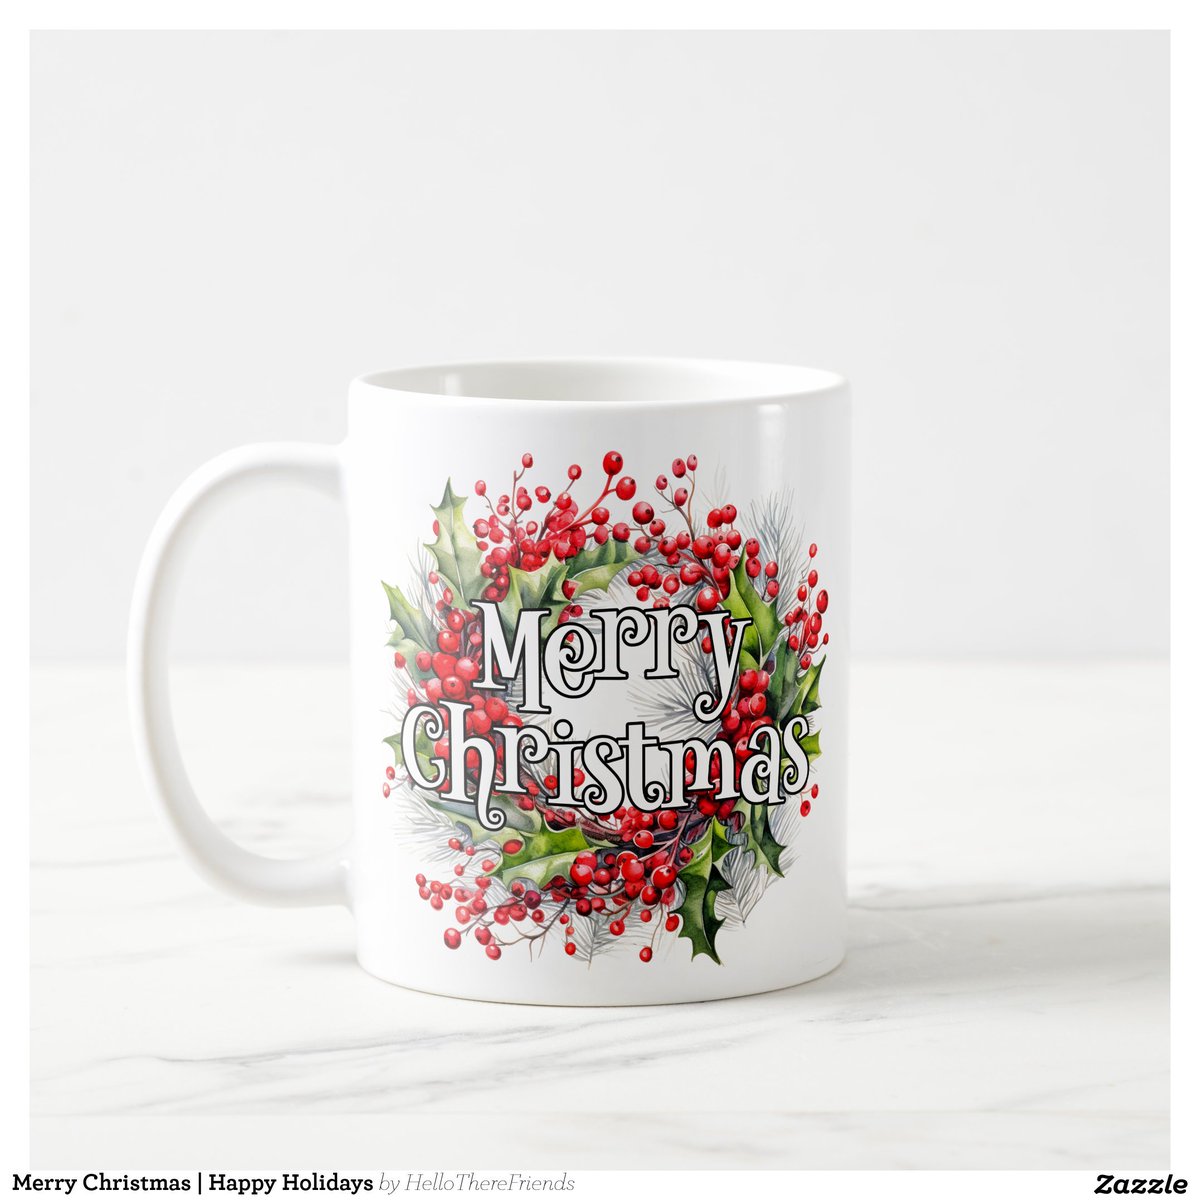 Merry Christmas | Happy Holidays Coffee Mug→zazzle.com/z/wi7p5snw?rf=…

#CoffeeMugs #ChristmasMugs #HolidayCoffeeMugs #Mugs #MerryChristmas #HappyHolidays #ChristmasGifts #GiftIdeas #Holidays #CoffeeLovers #Zazzle